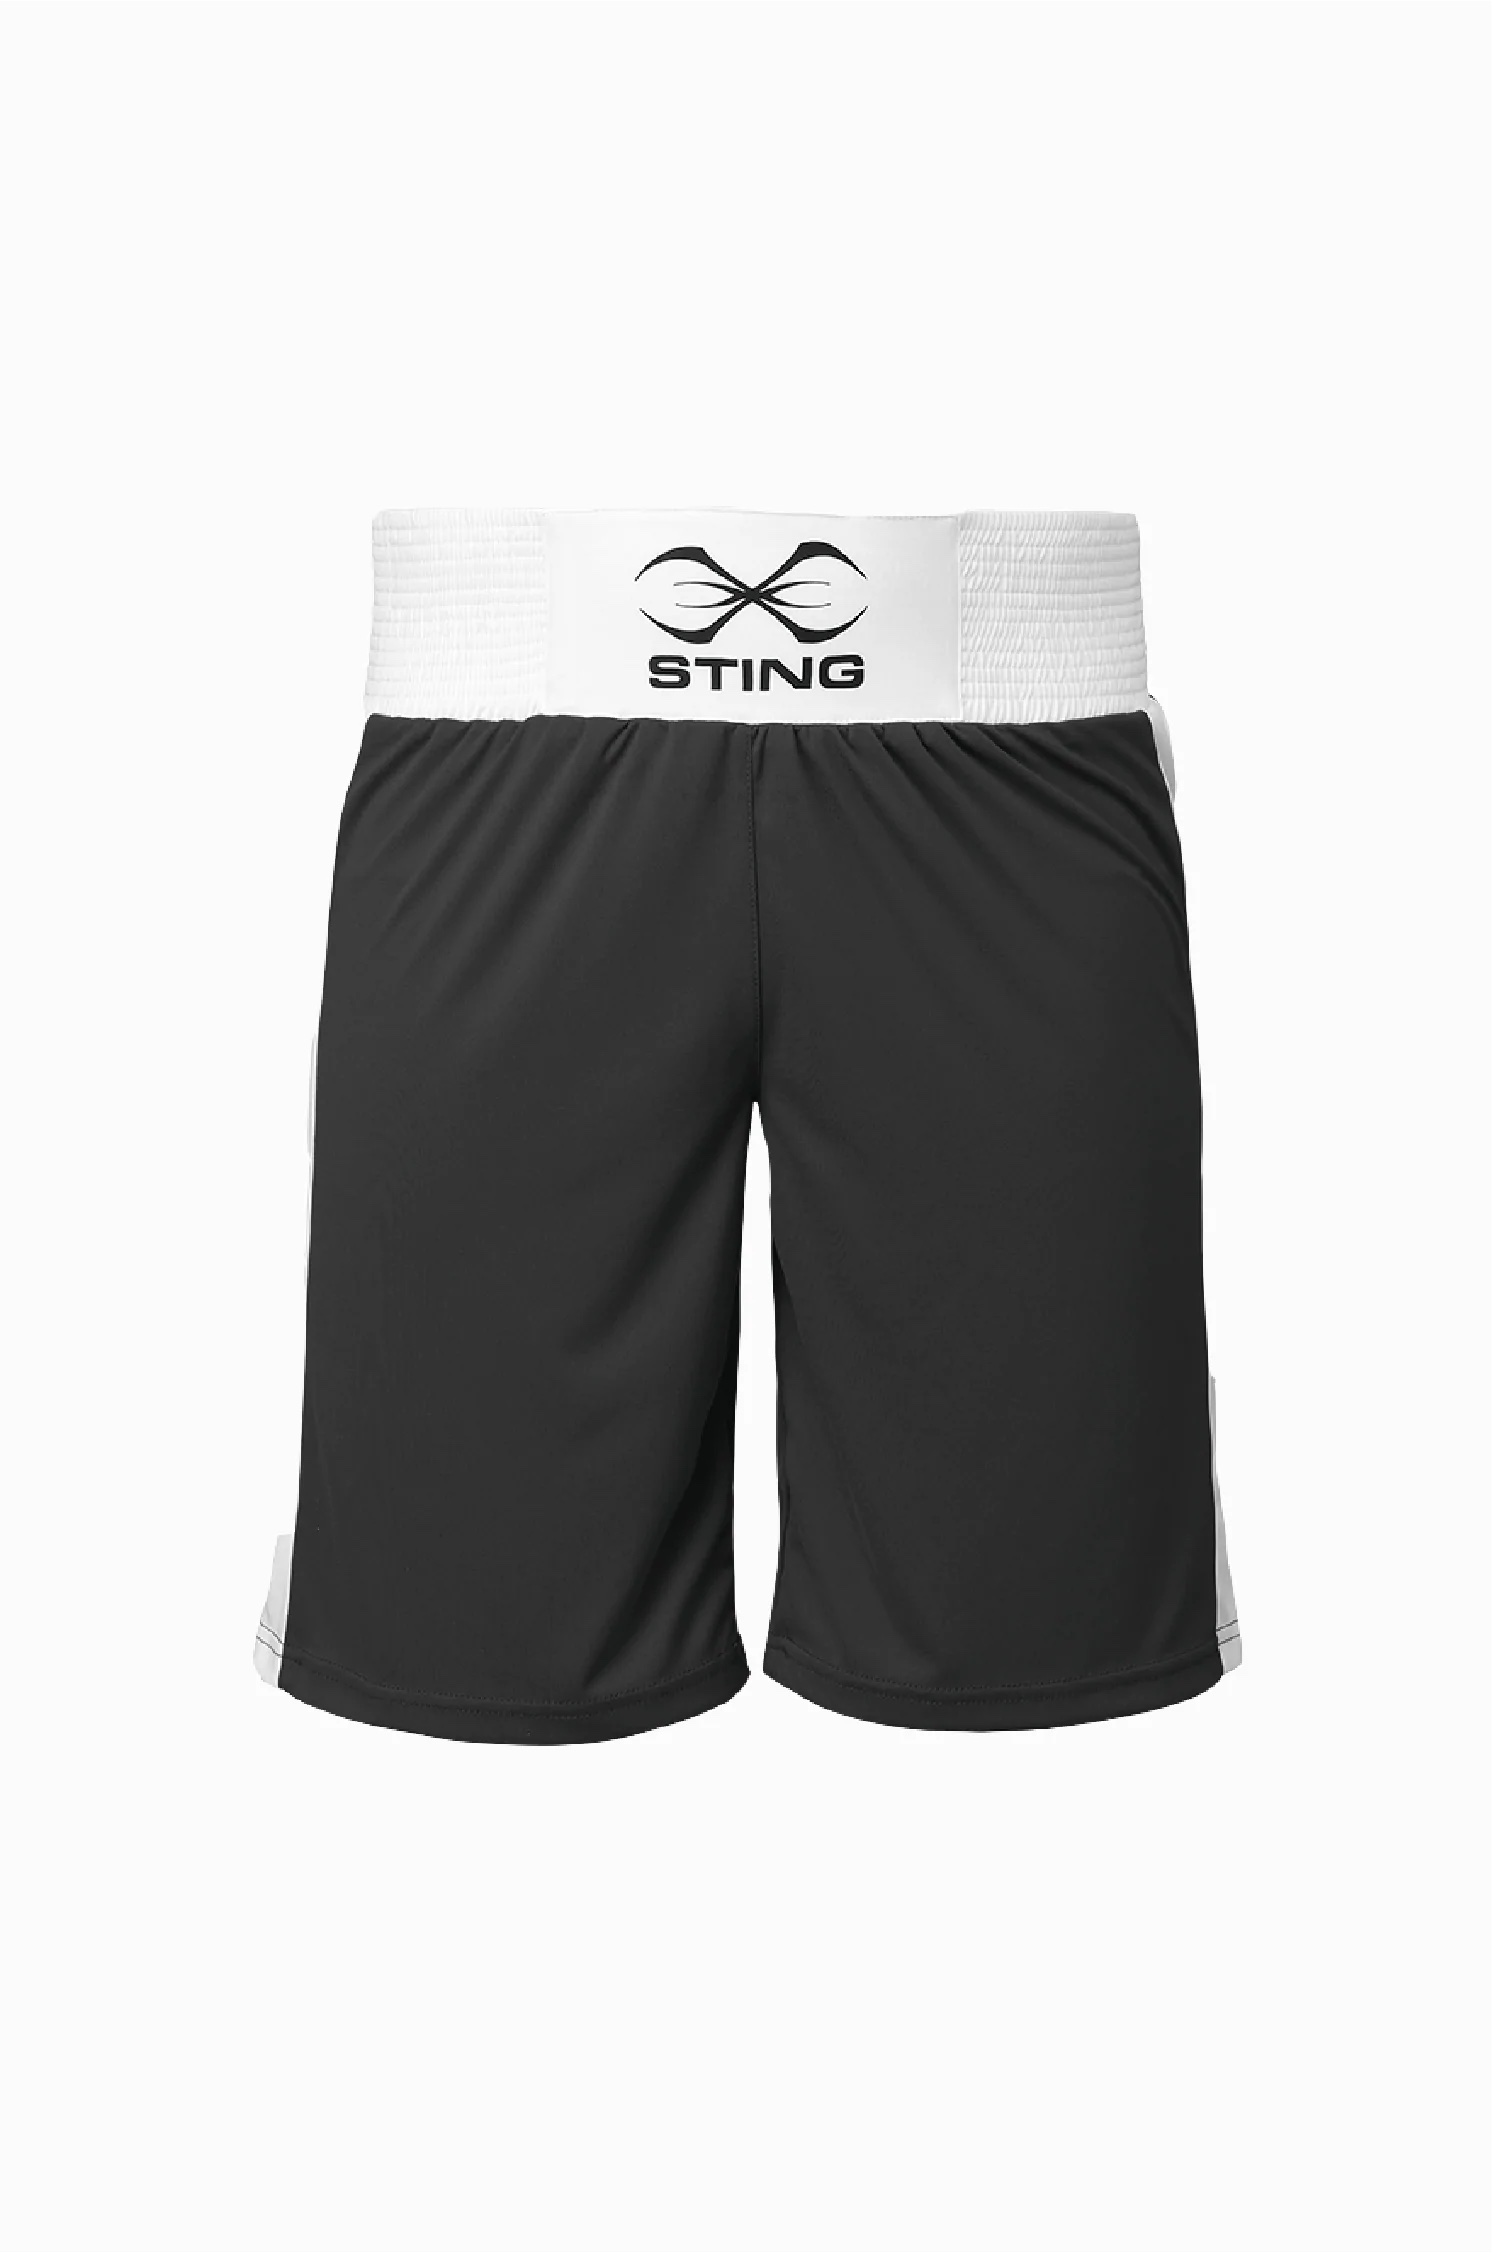 Sting Mens Mettle Boxing Shorts Black